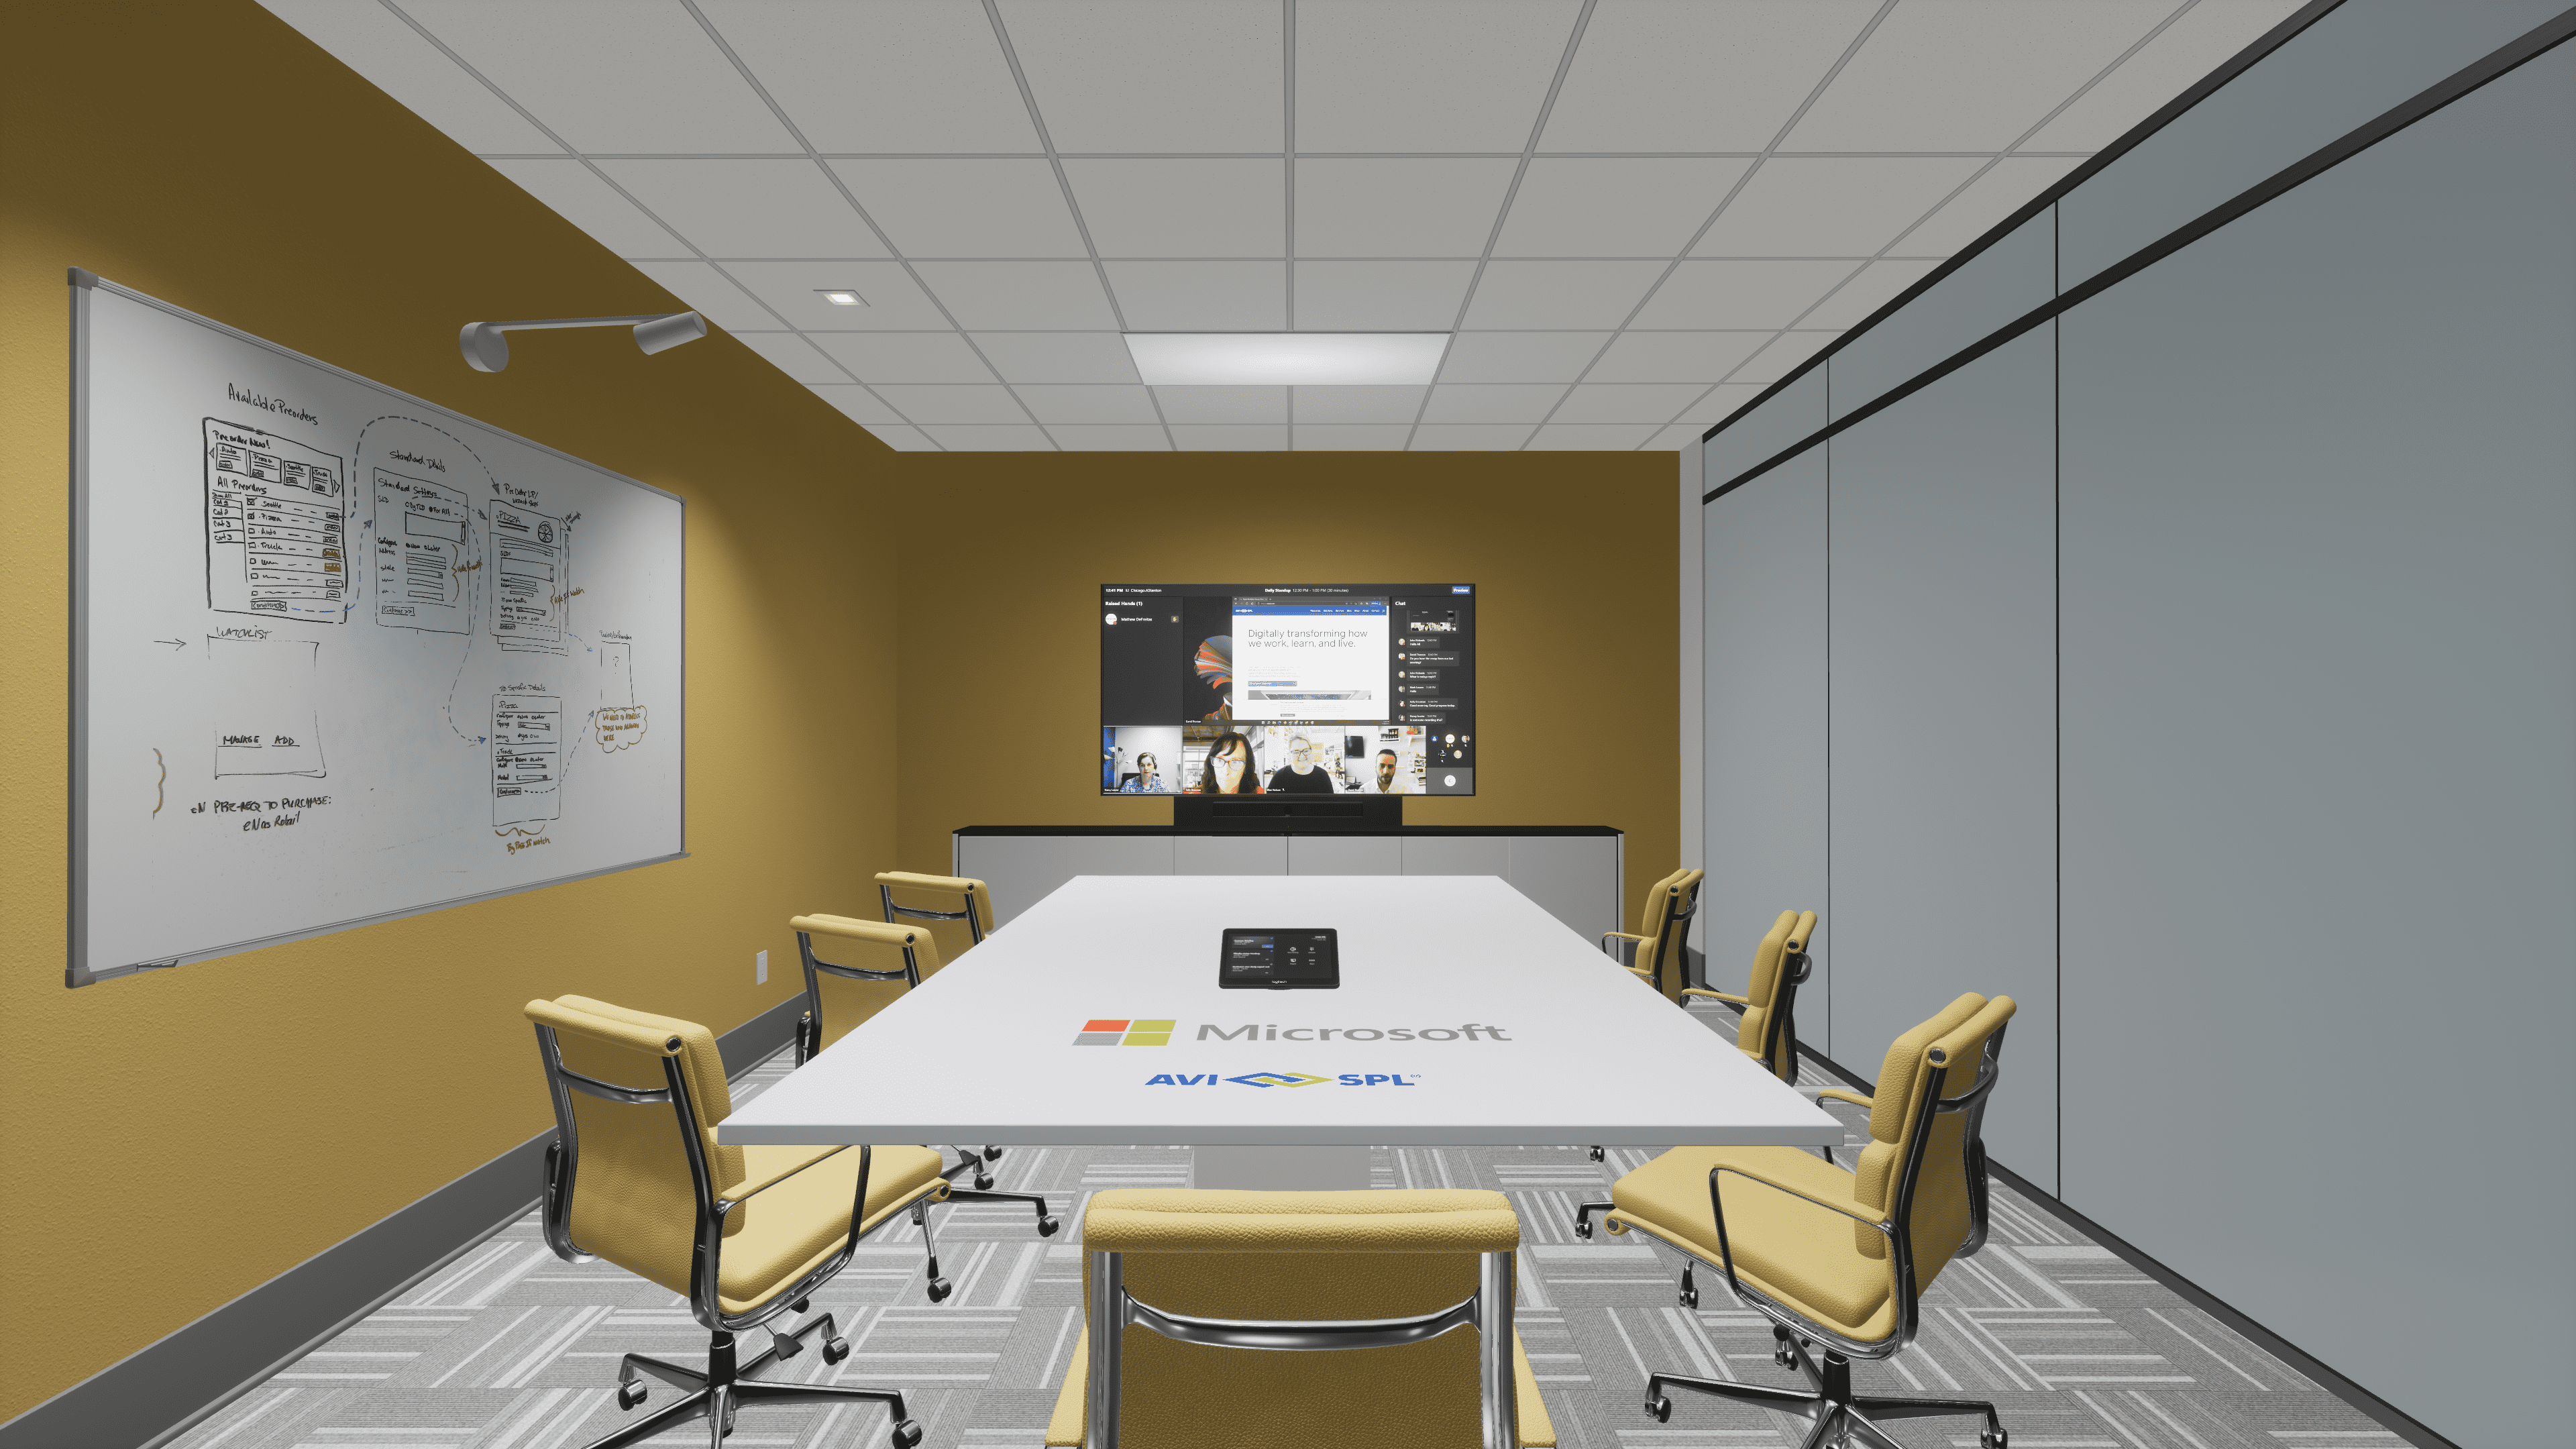 VR reference designs large conference room